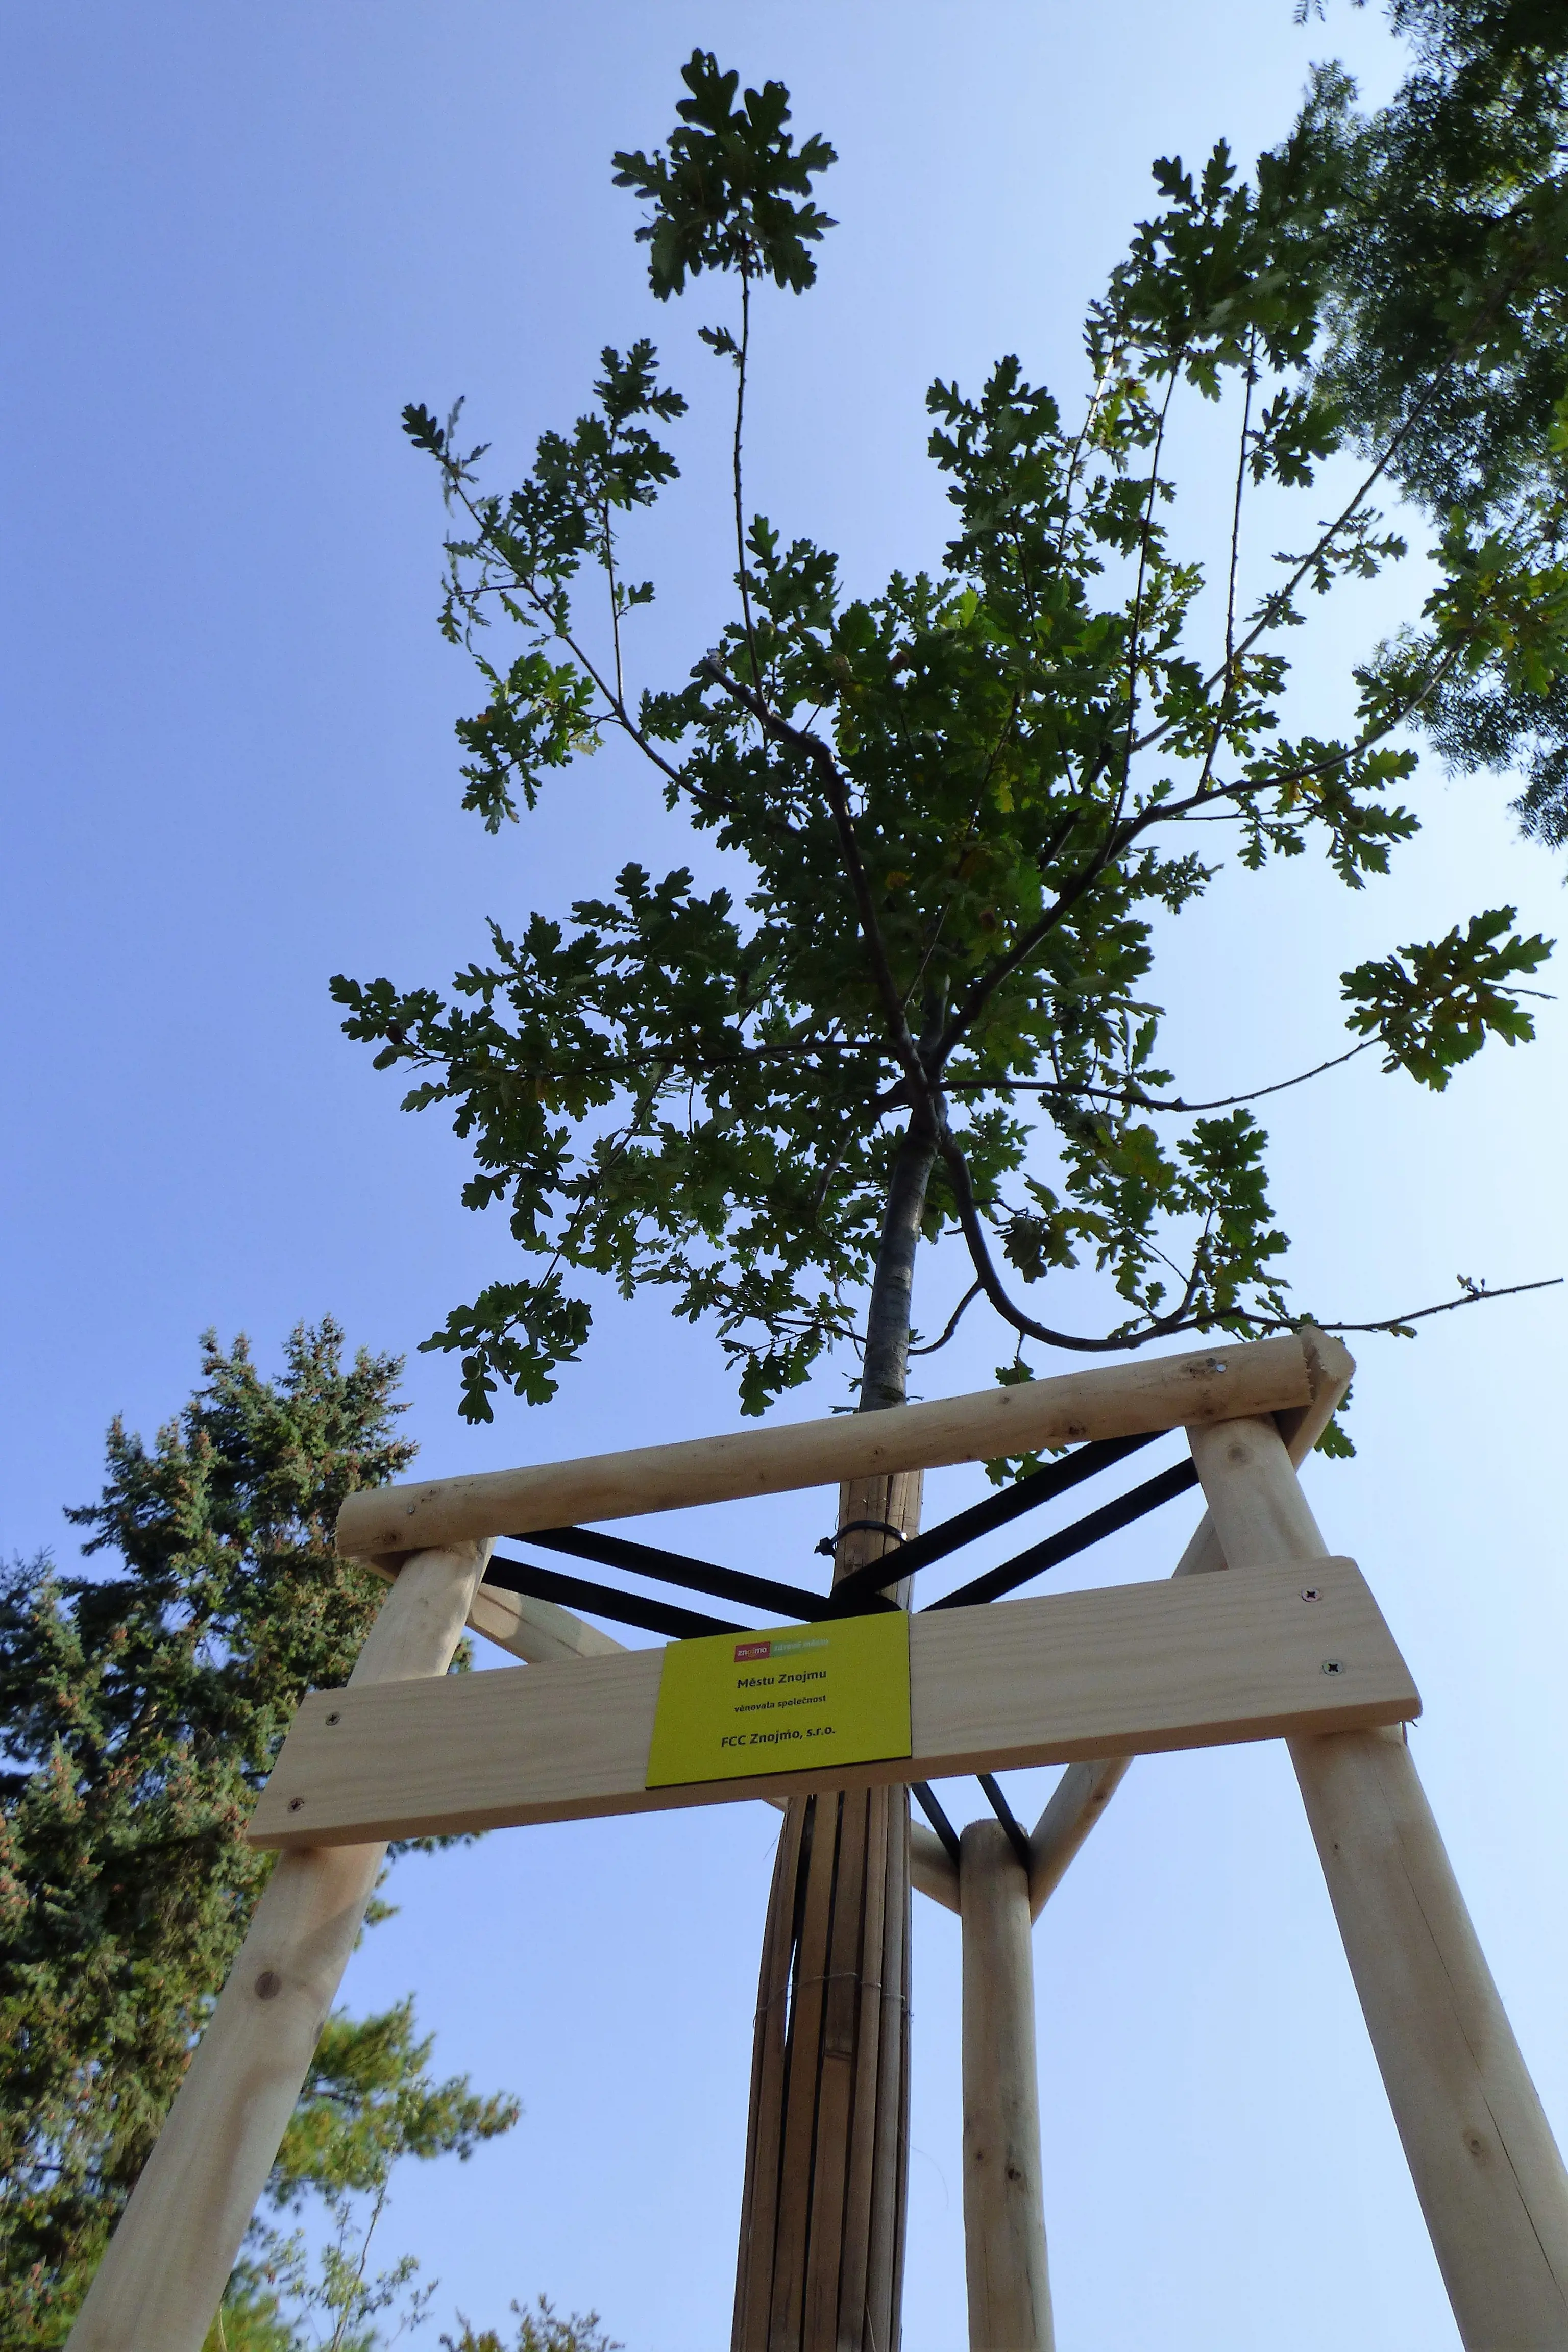 The company FCC Znojmo (CZ) has adopted a tree